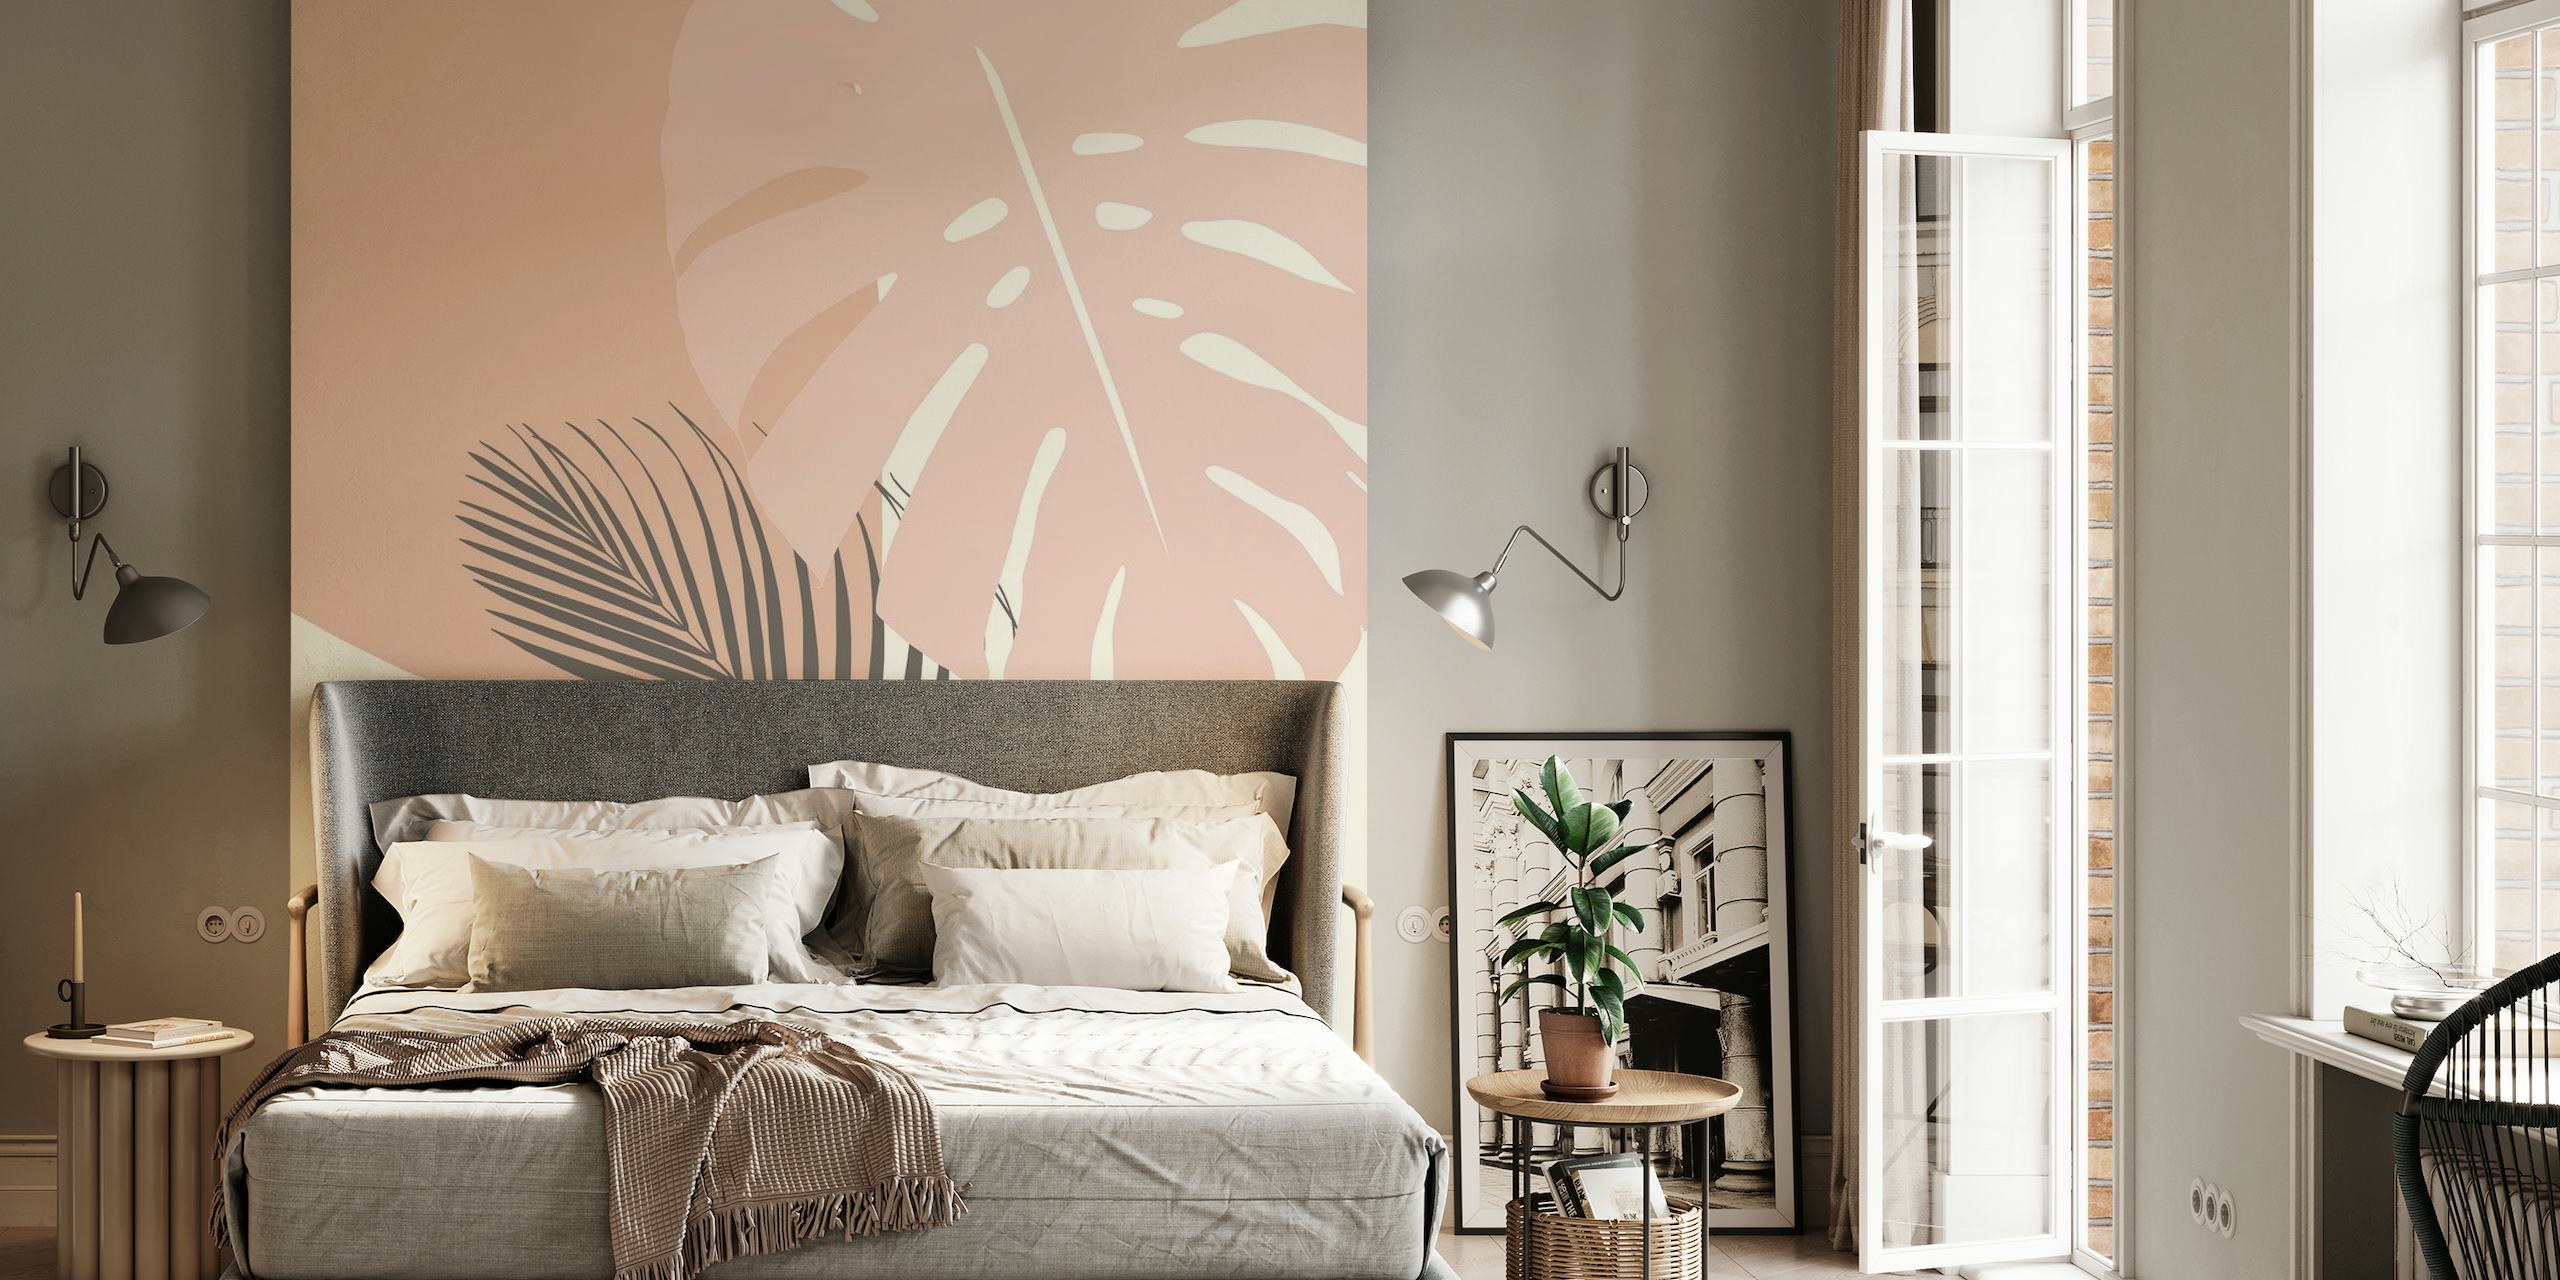 Stilisiertes Monstera- und Palmenblatt-Wandbild in sanften Erdtönen